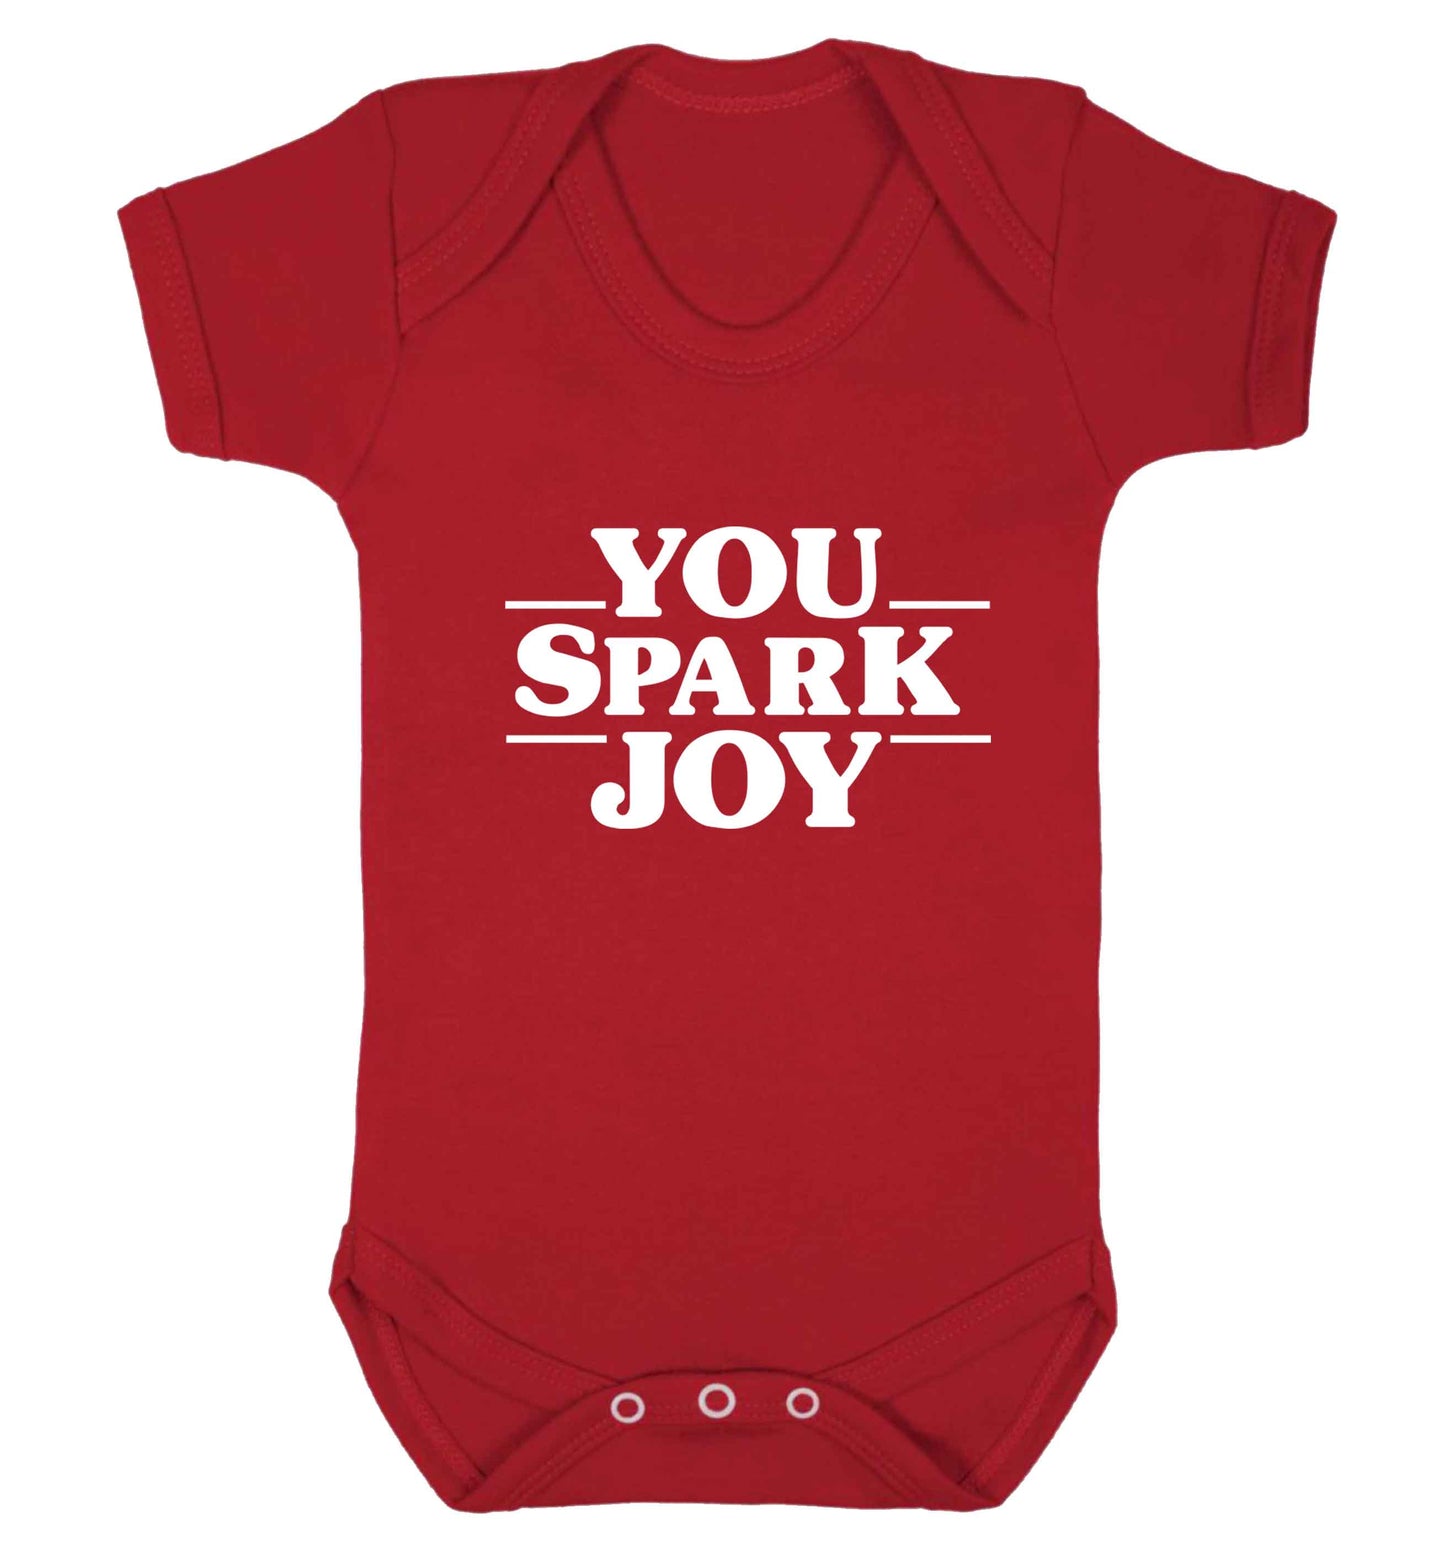 You spark joy baby vest red 18-24 months